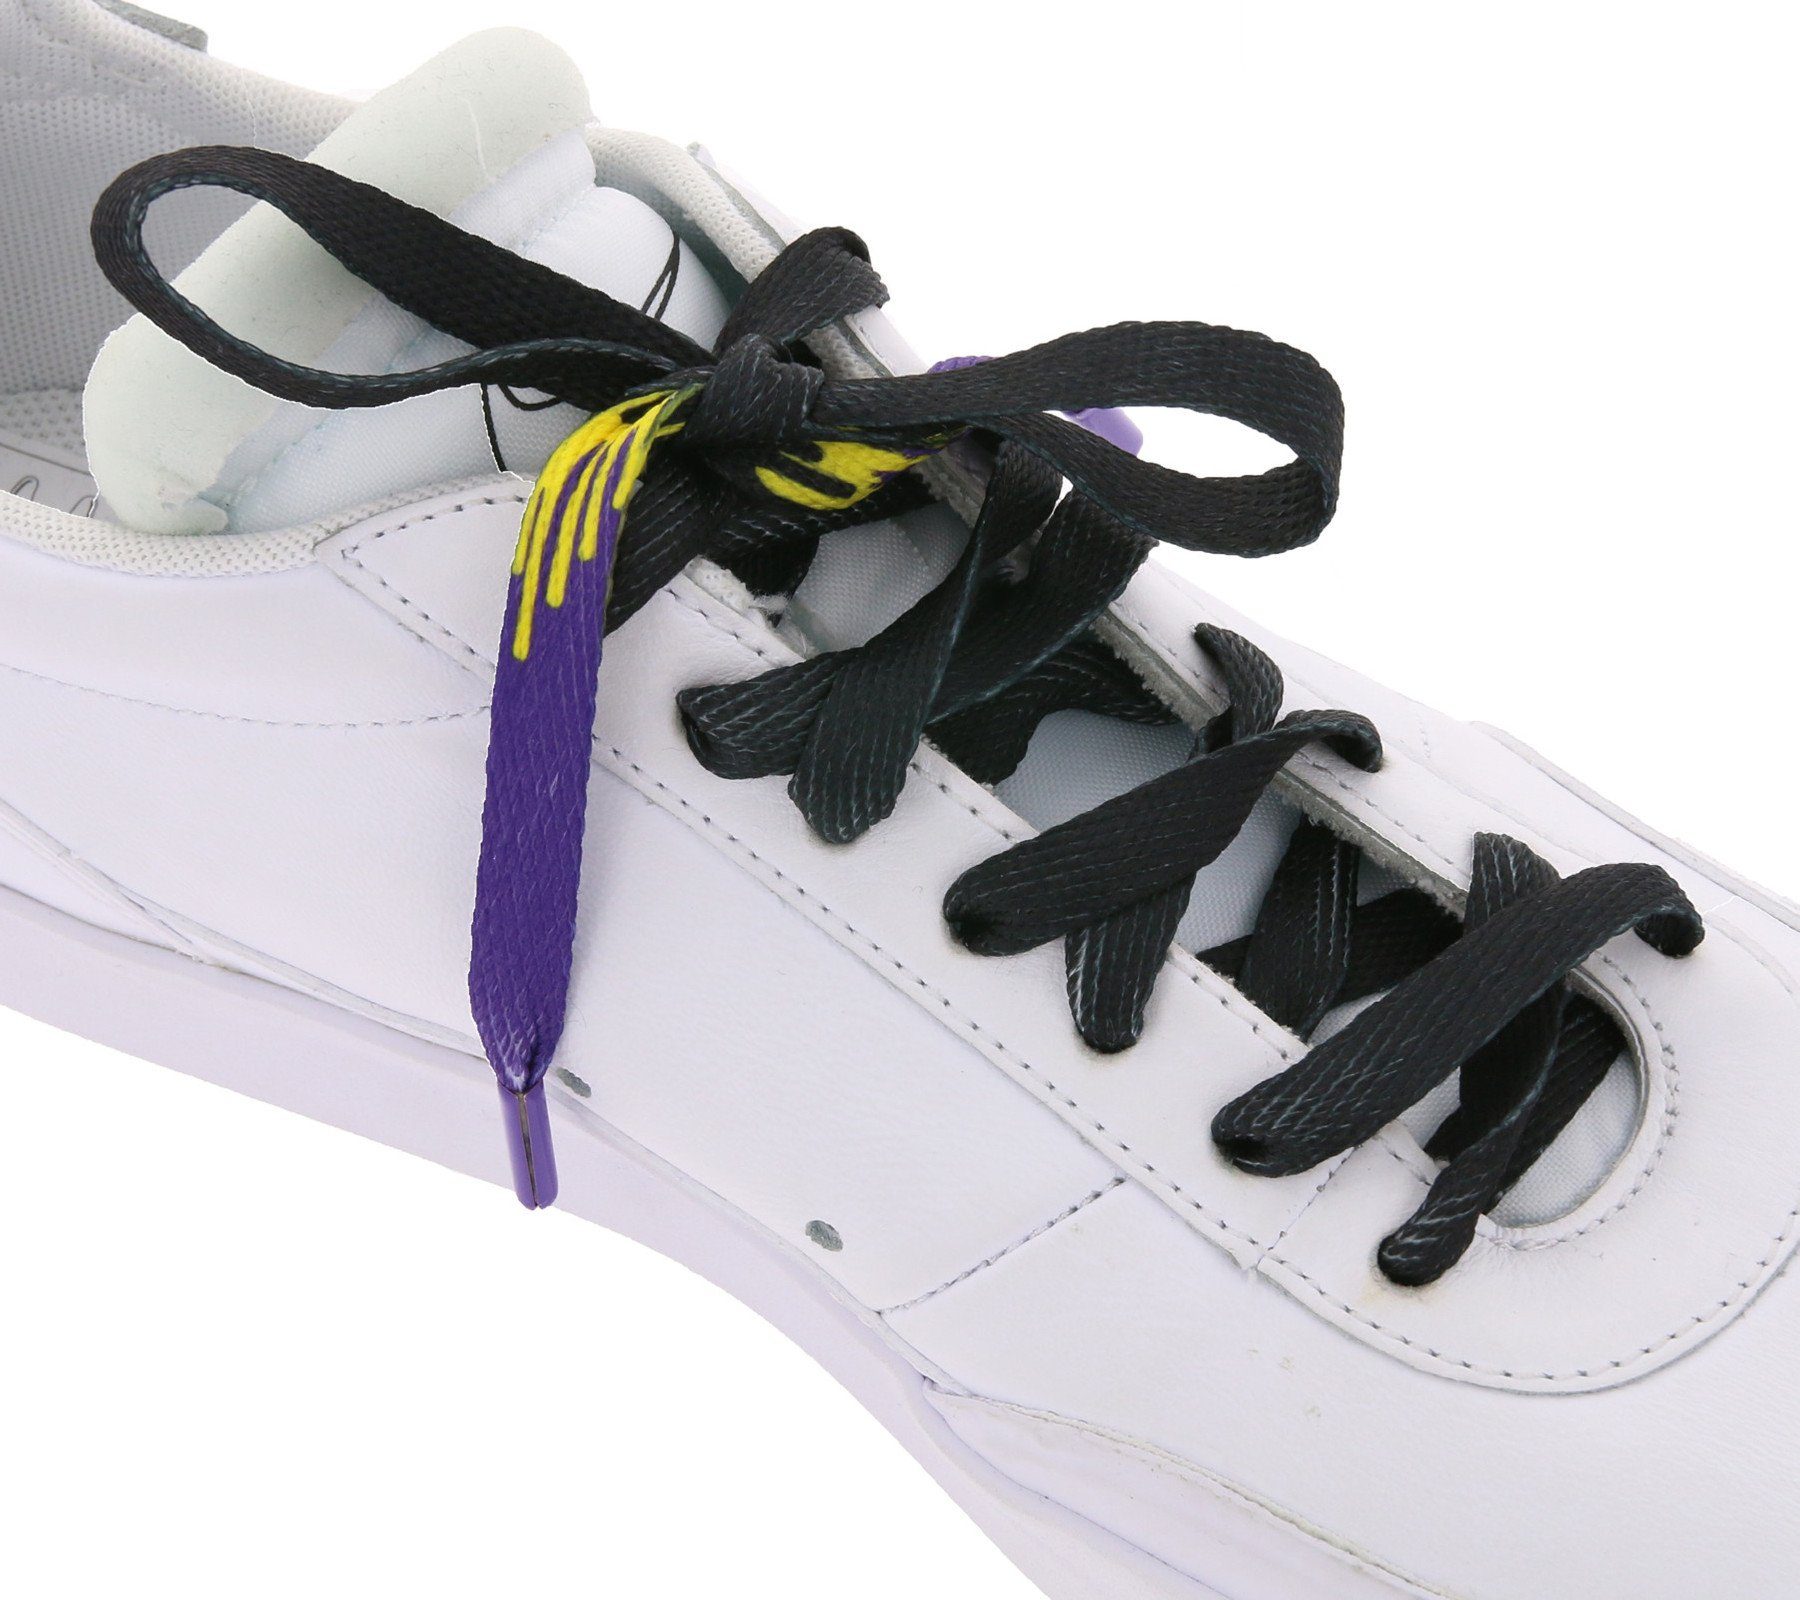 Tubelaces Schnürsenkel TubeLaces Schuhe Schuhbänder coole Schnürsenkel Schnürbänder Schwarz/Violett/Gelb